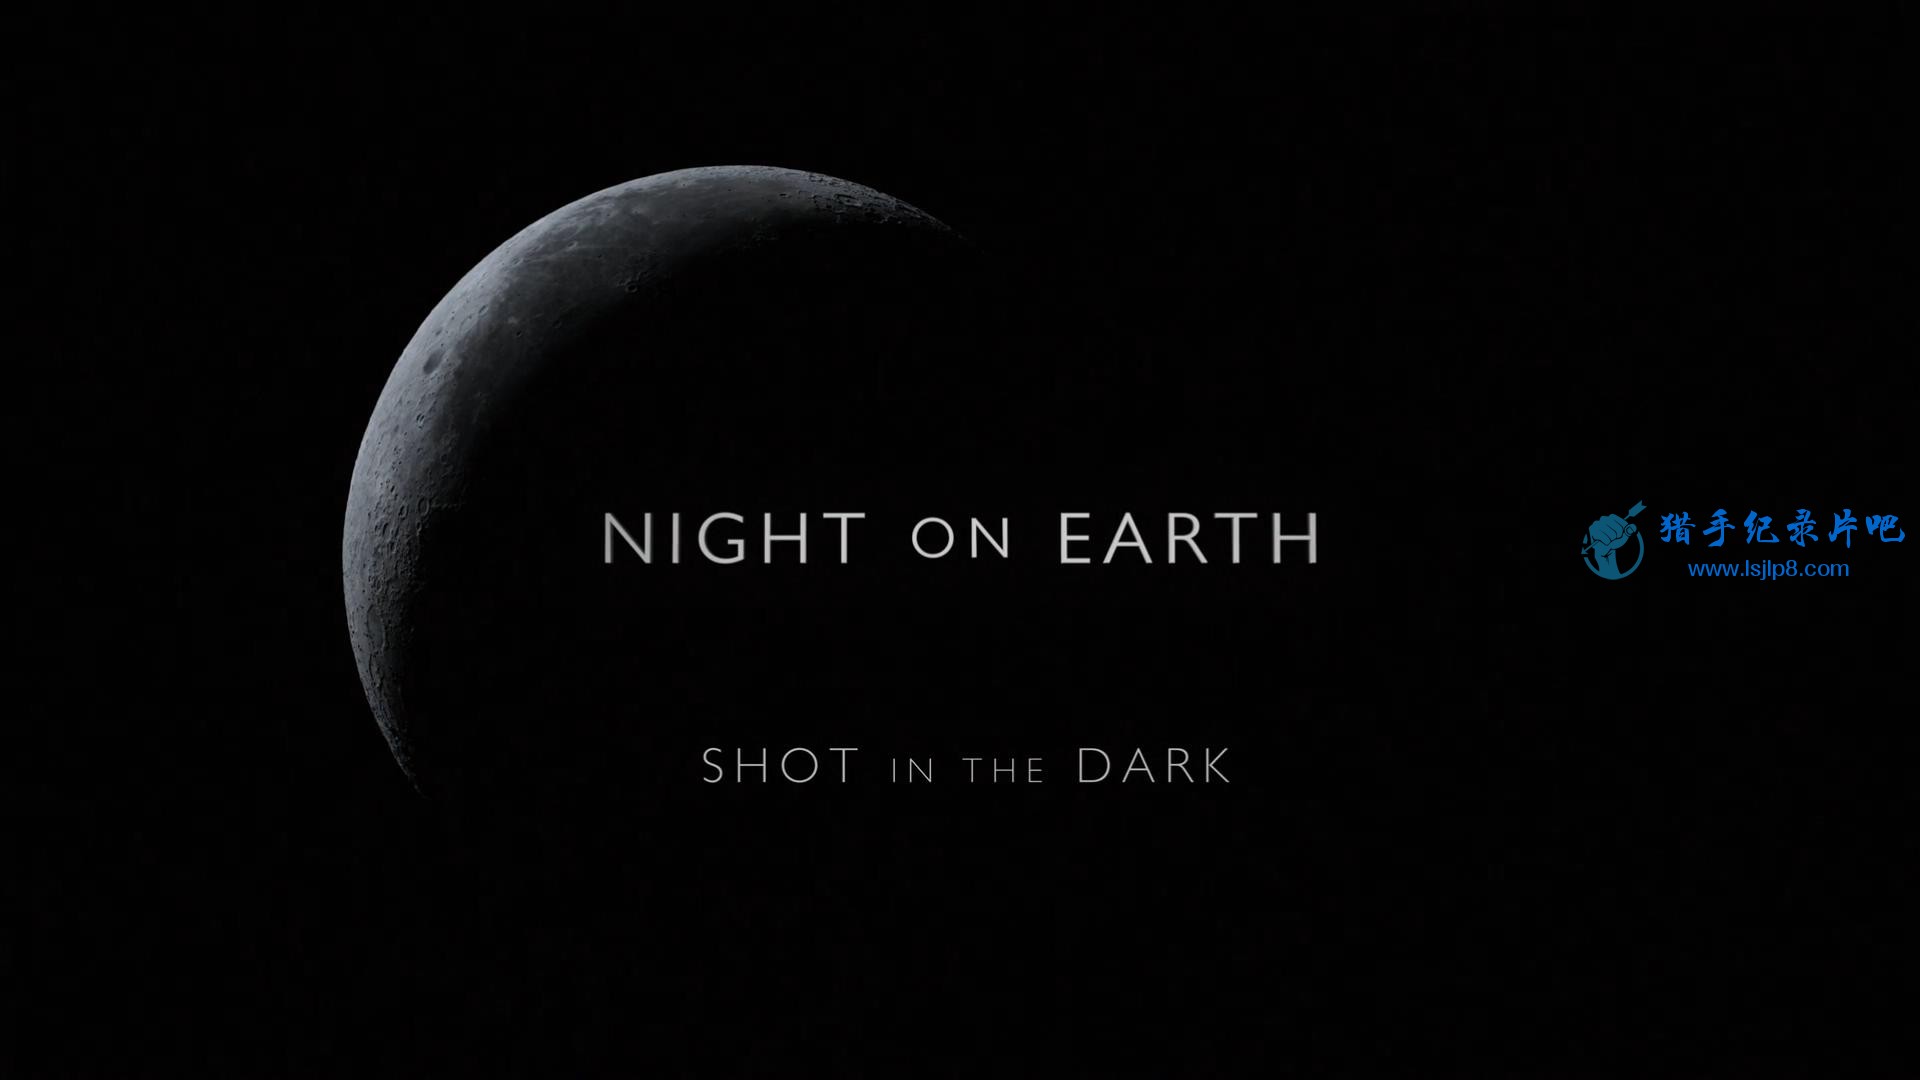 Night.on.Earth.S00E01.Shot.in.the.Dark.2020.1080p.NF.WEB-DL.DDP5.1.x264-NTG.mkv_.jpg